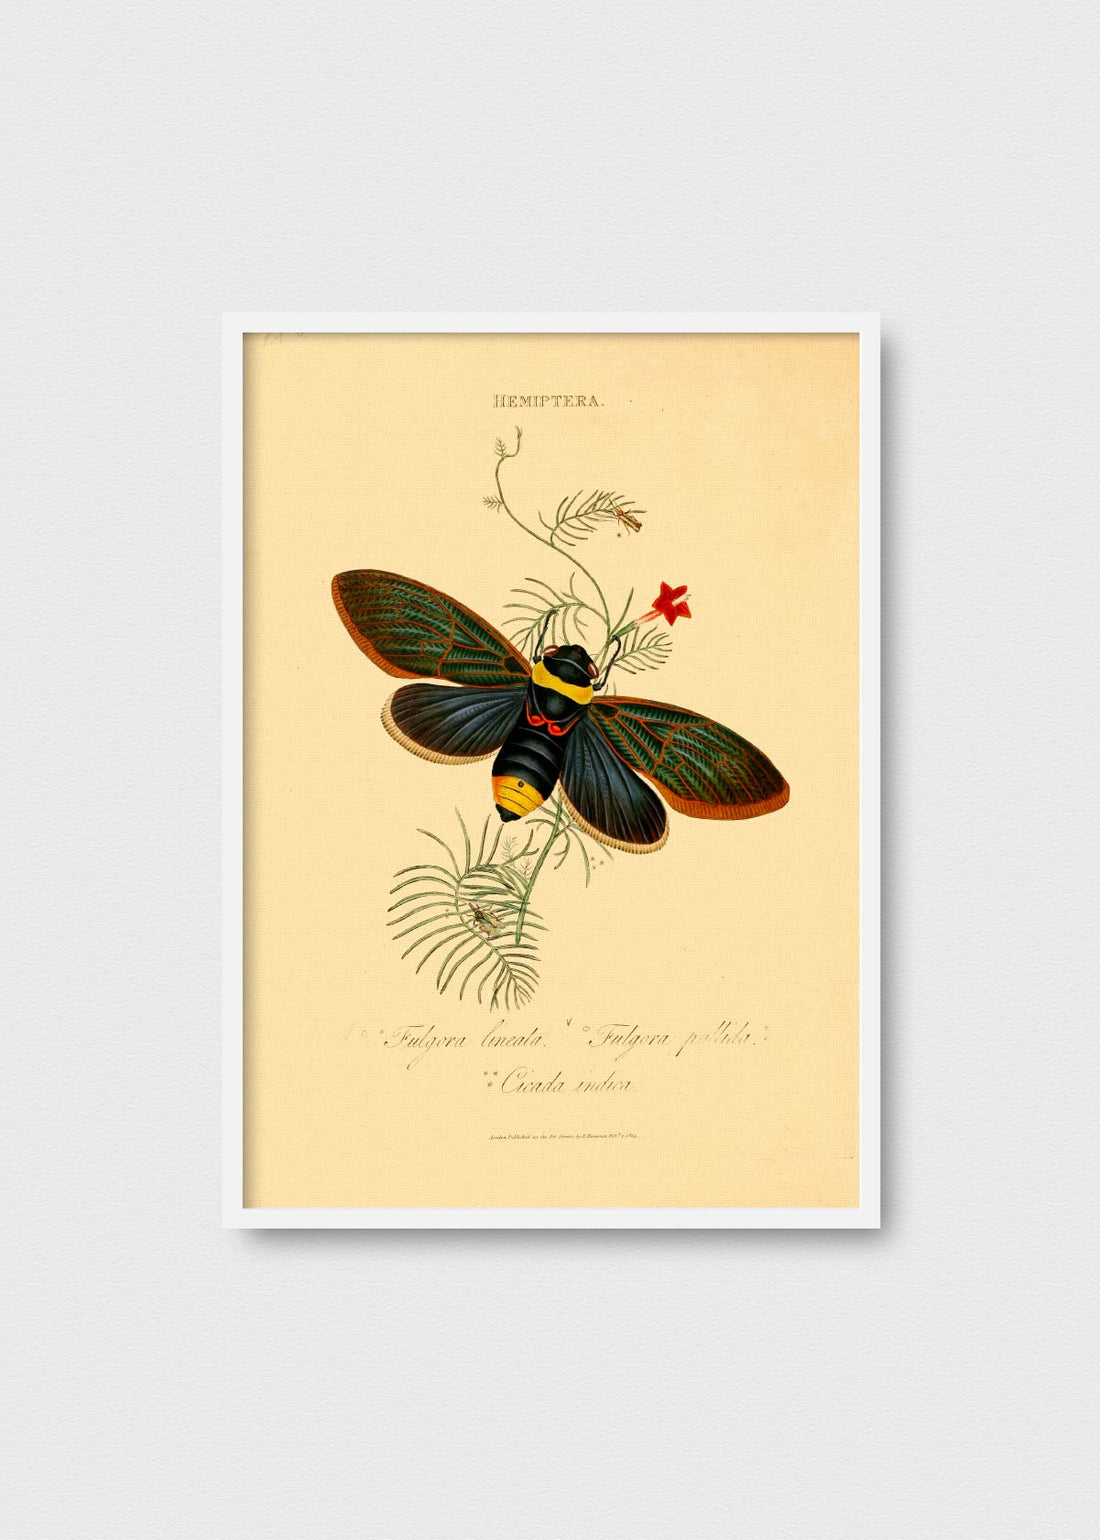 Cicada Indica - Testimoniaprints